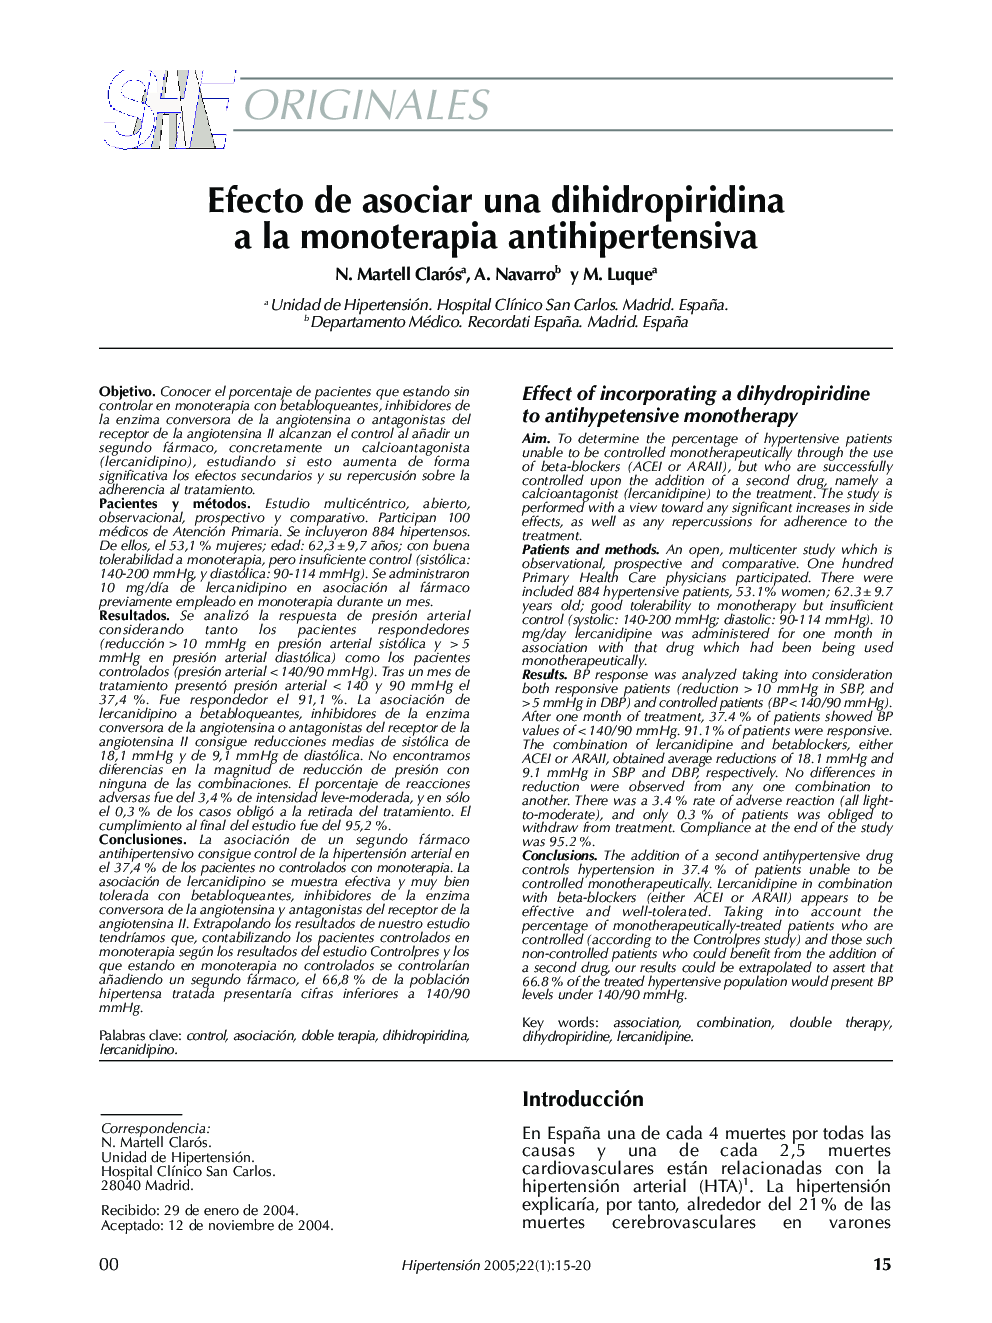 Efecto de asociar una dihidropiridina a la monoterapia antihipertensiva